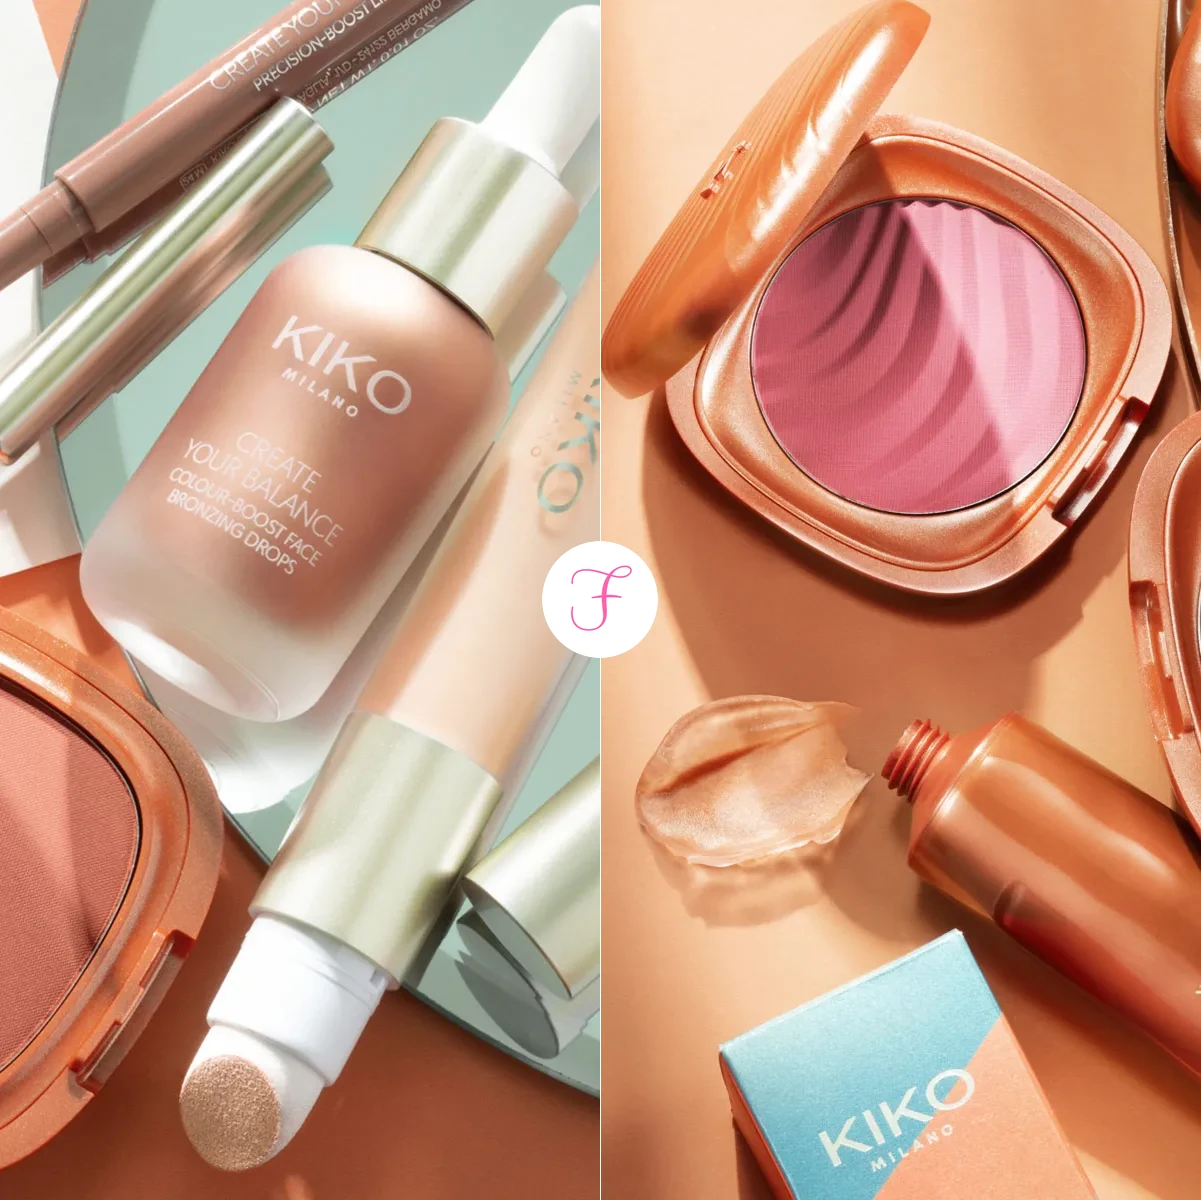 kiko-create-your-balance-make-up-viso